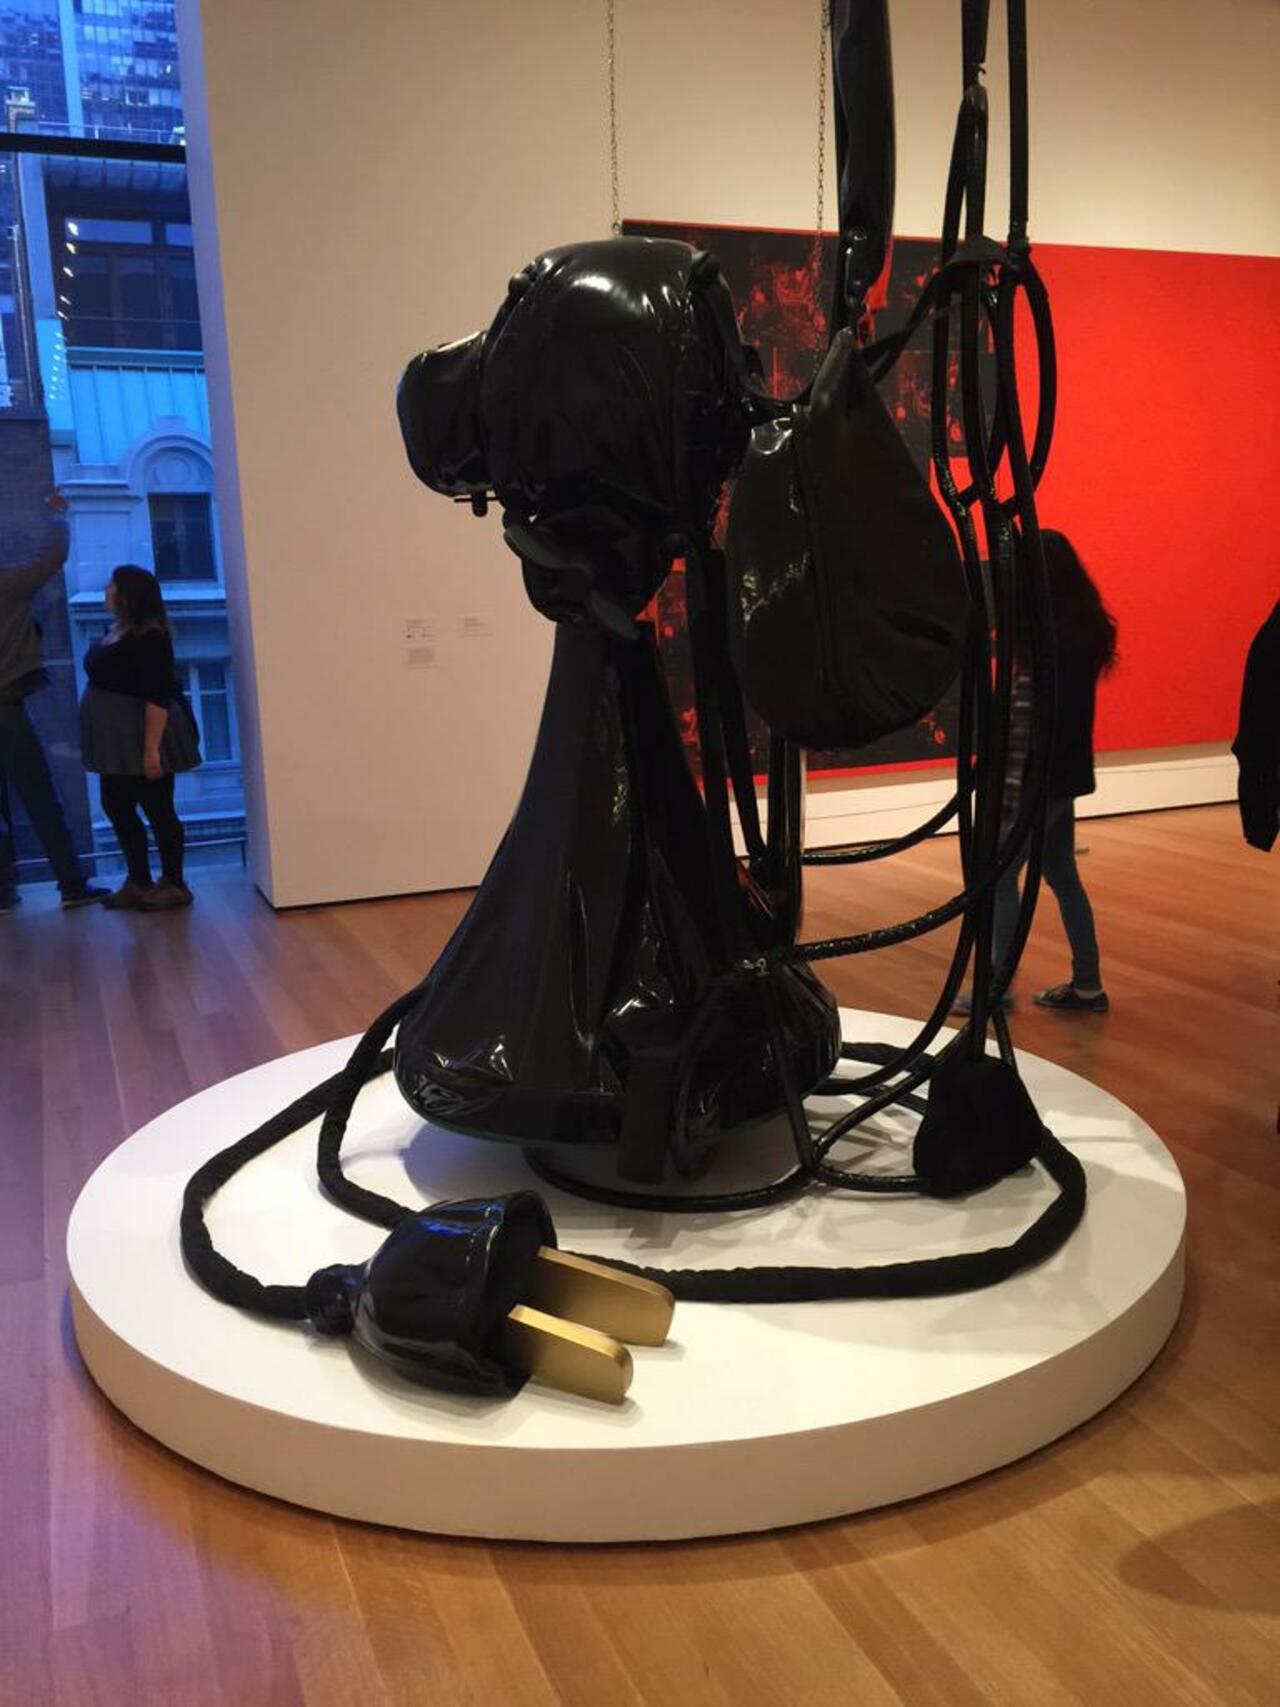 #arts #MoMA http://t.co/2CXm8hvoJY